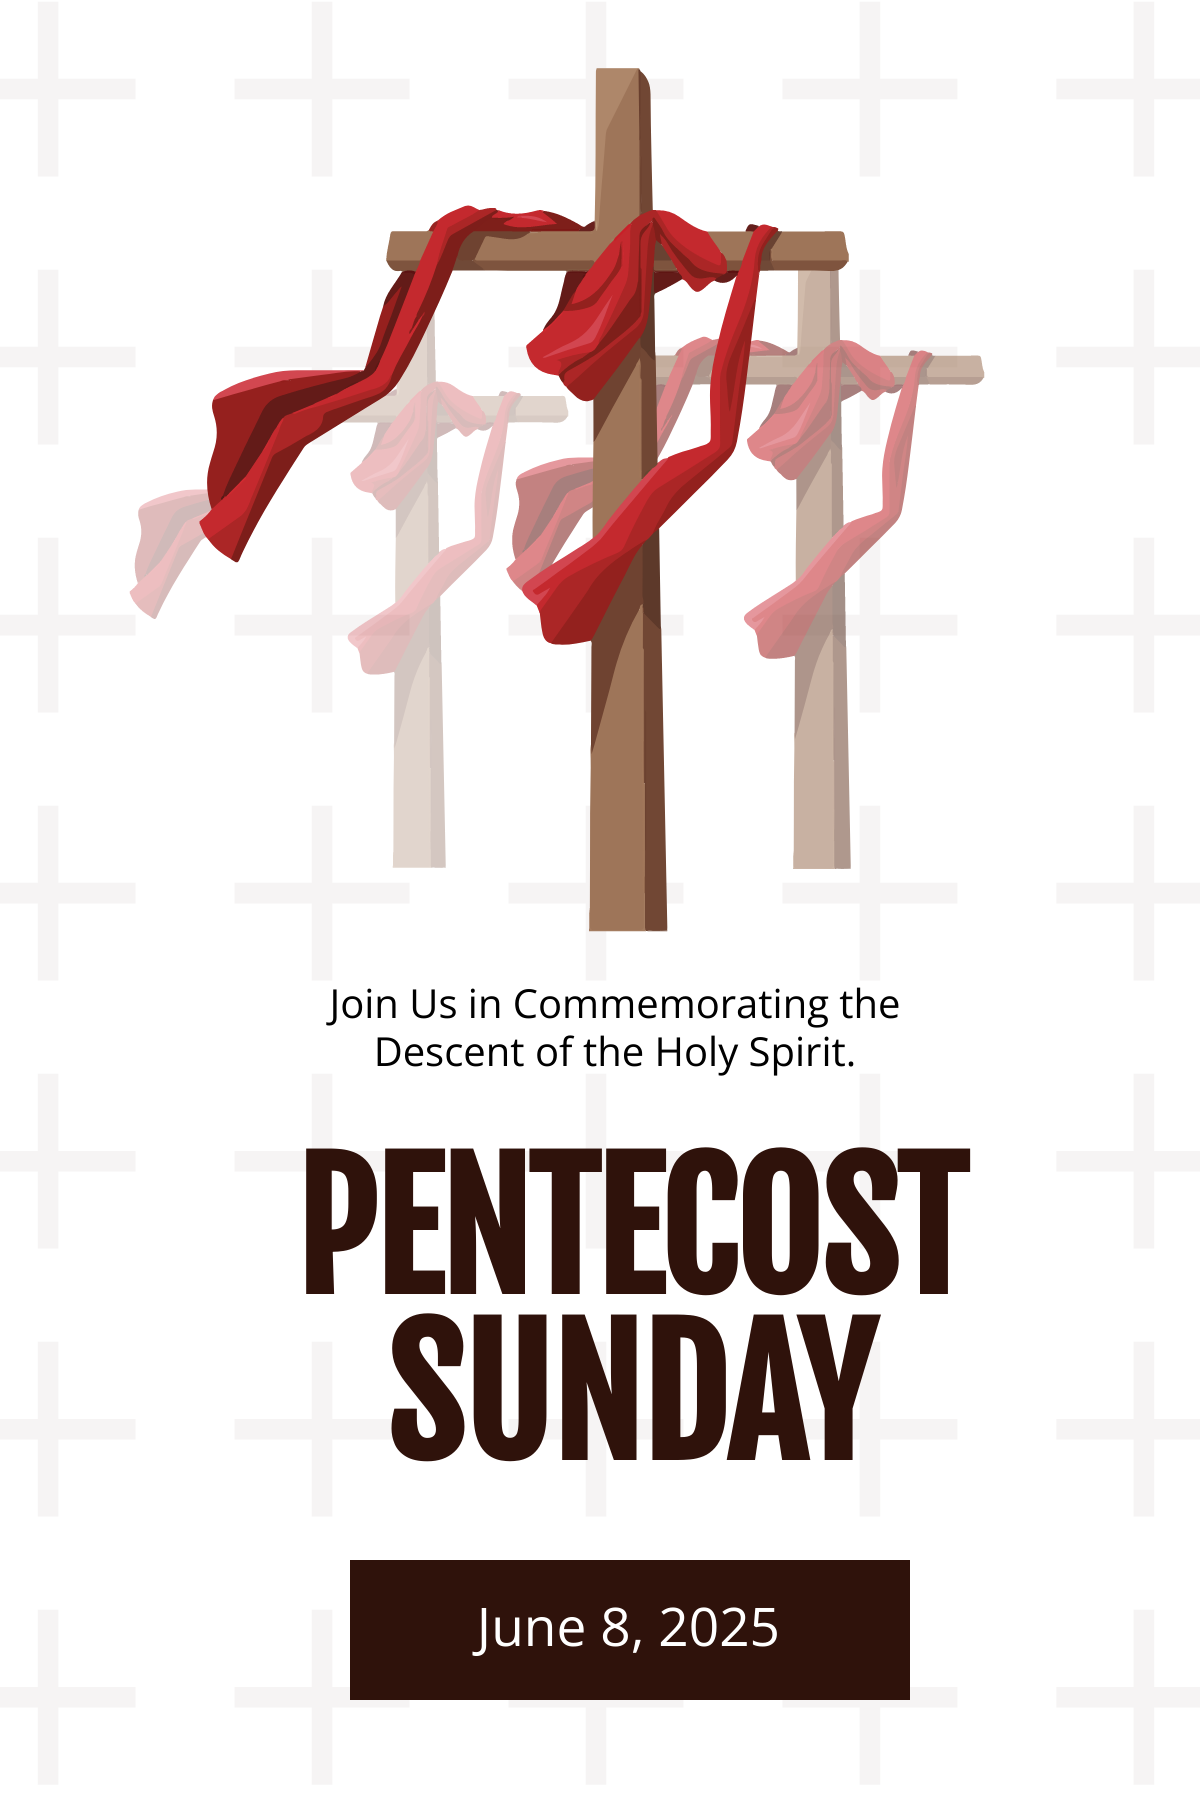 Pentecost Sunday Pinterest Pin Template